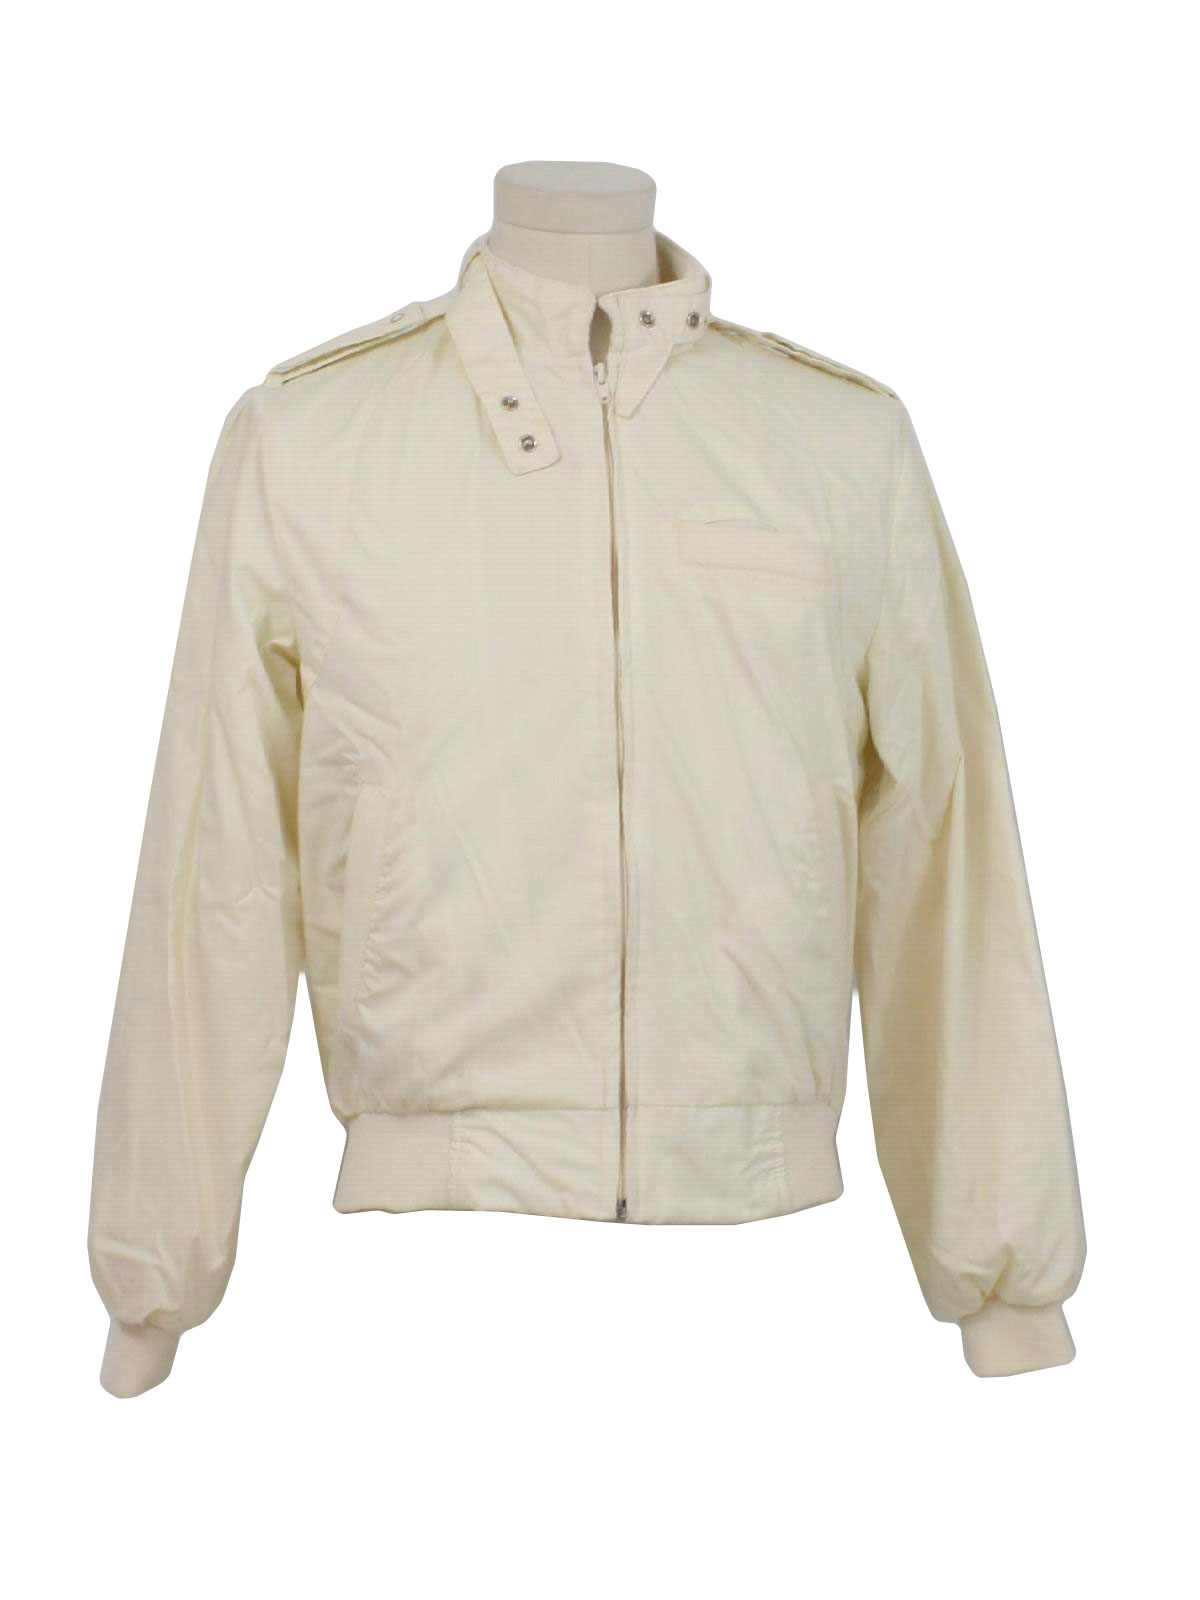 Retro 1980's Jacket (Sears) : 80s -Sears- Mens cream cotton and ...